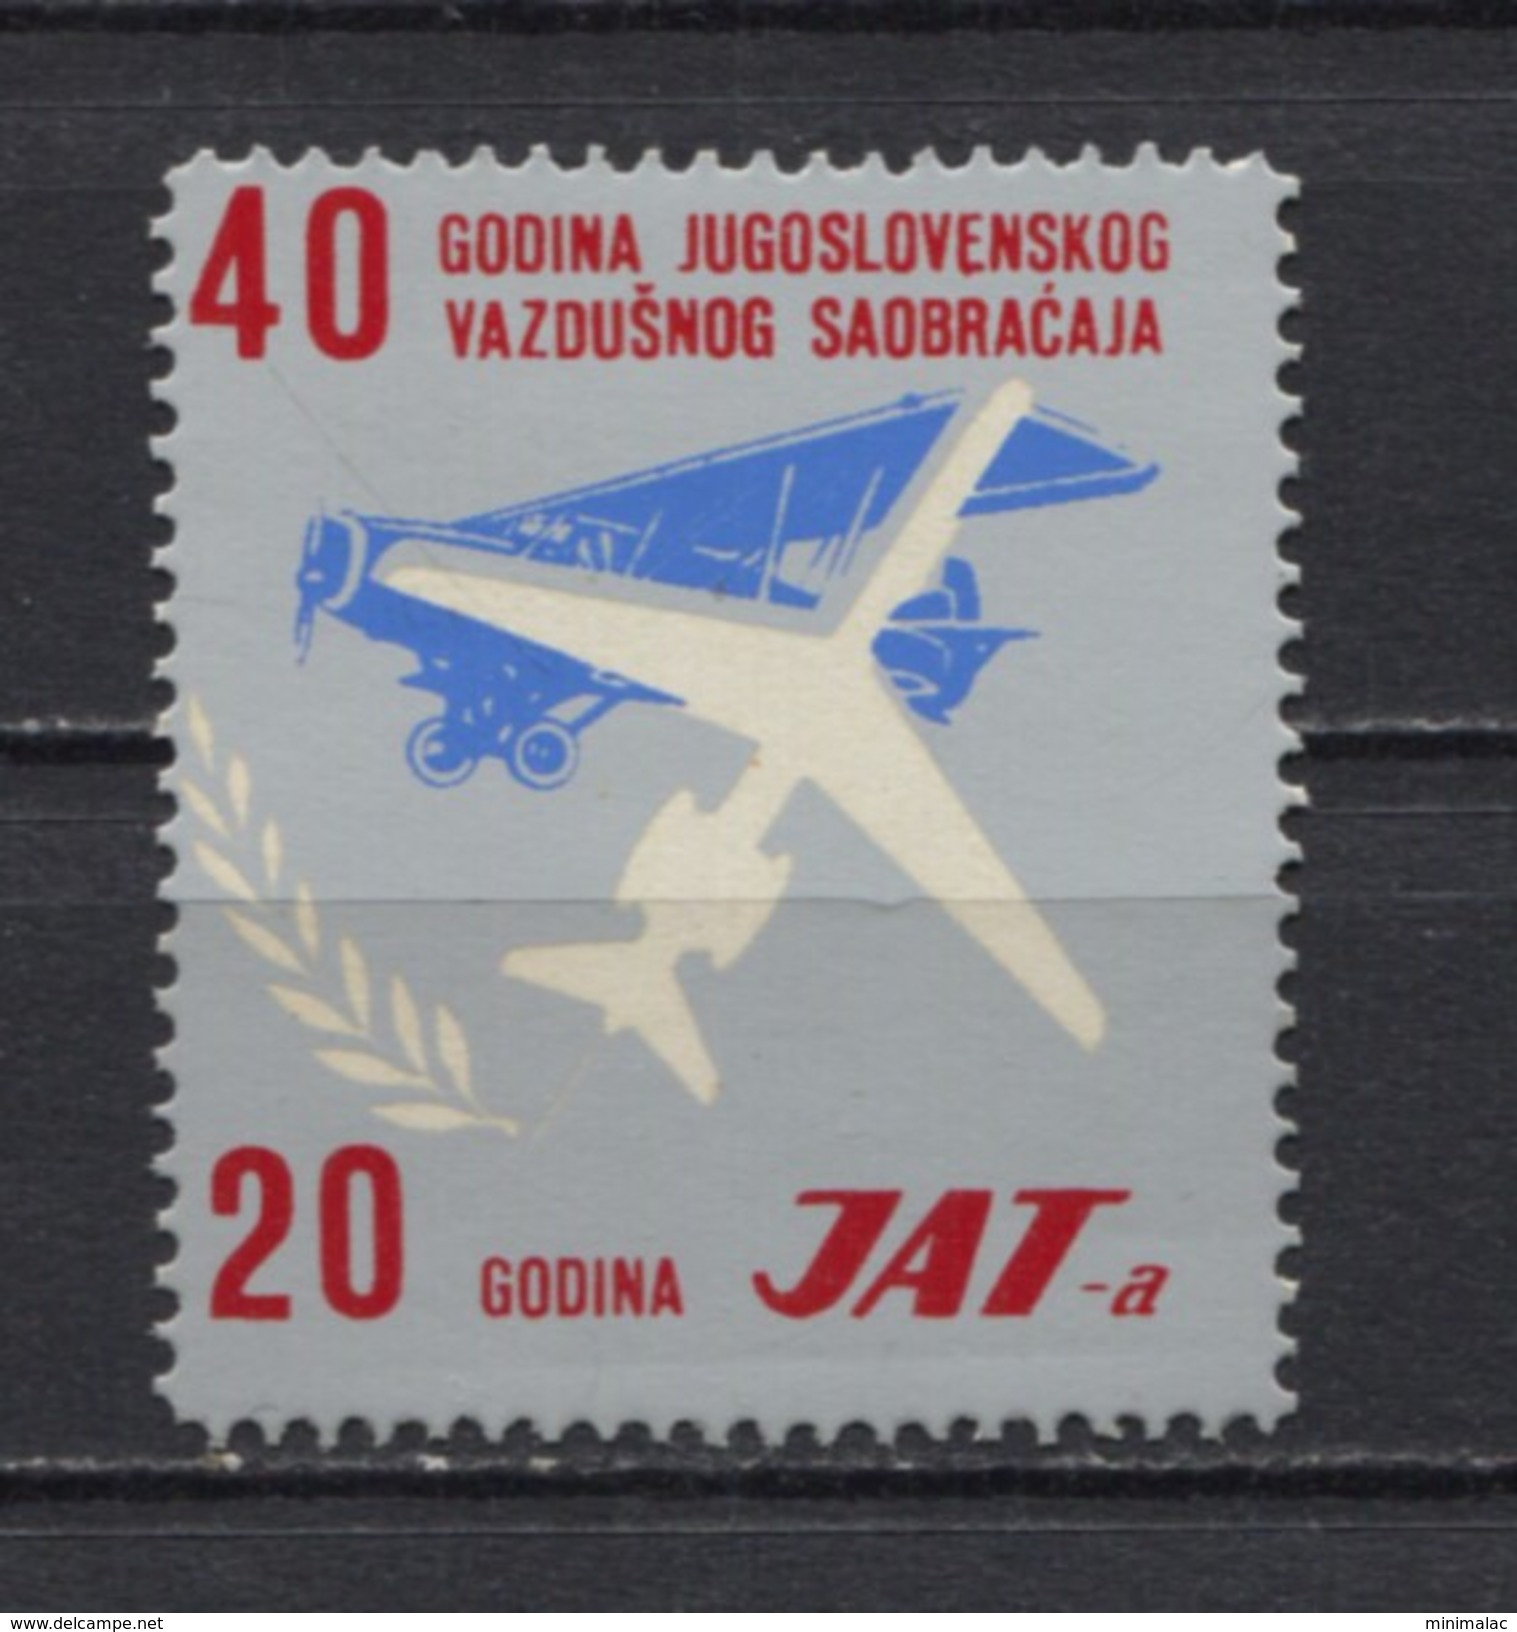 Yugoslavia 1967, 40th Anniversary Of Yugoslav Air Traffic, Yugoslav Airlines, JAT, Plane, Cinderella, Additional,  MNH - Luftpost